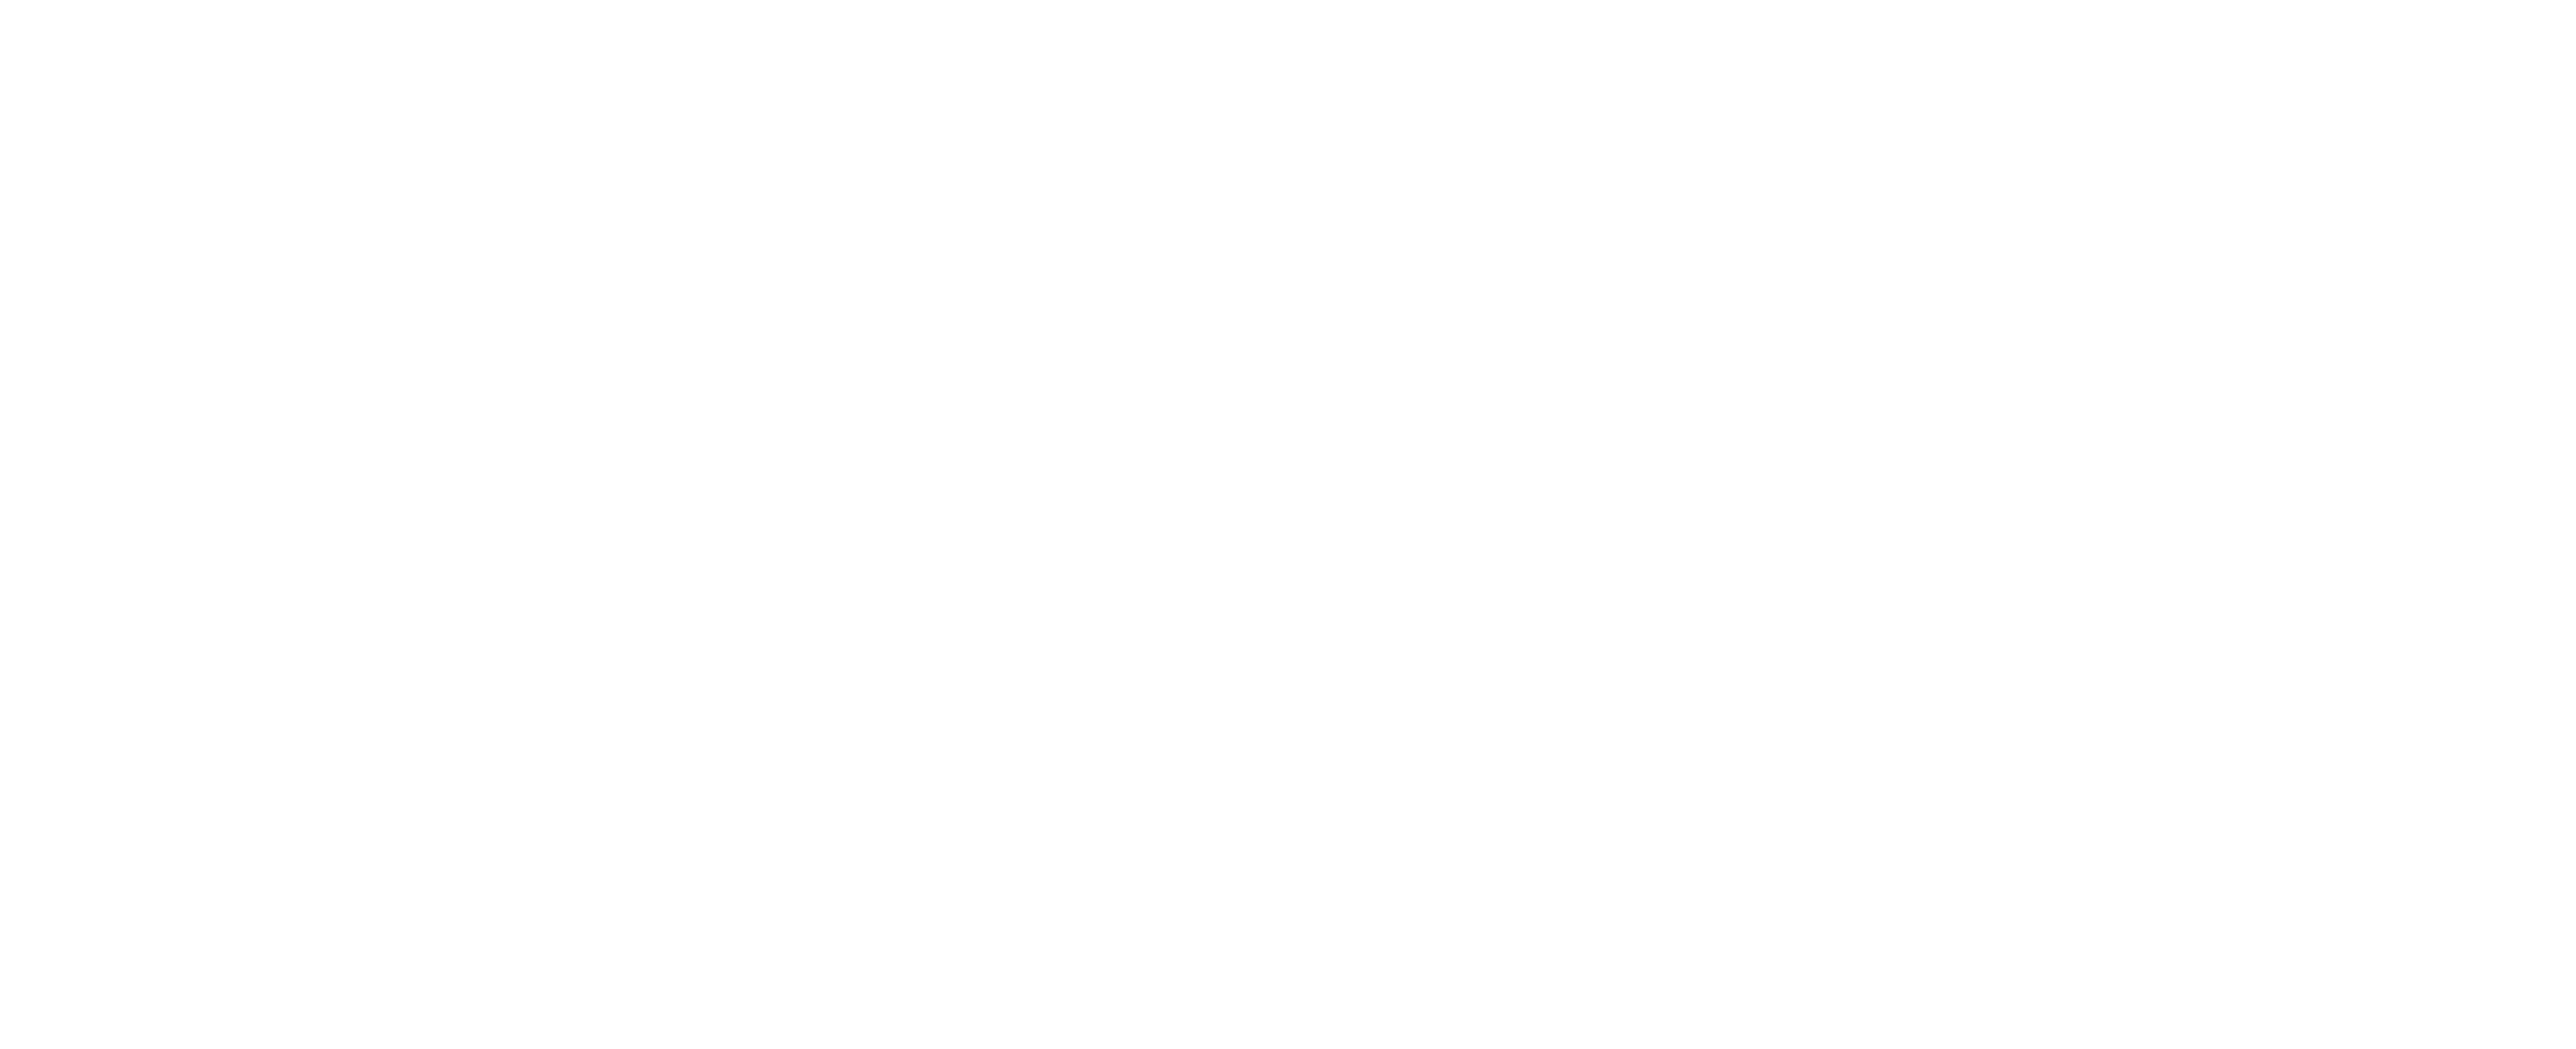 Dani Digital White